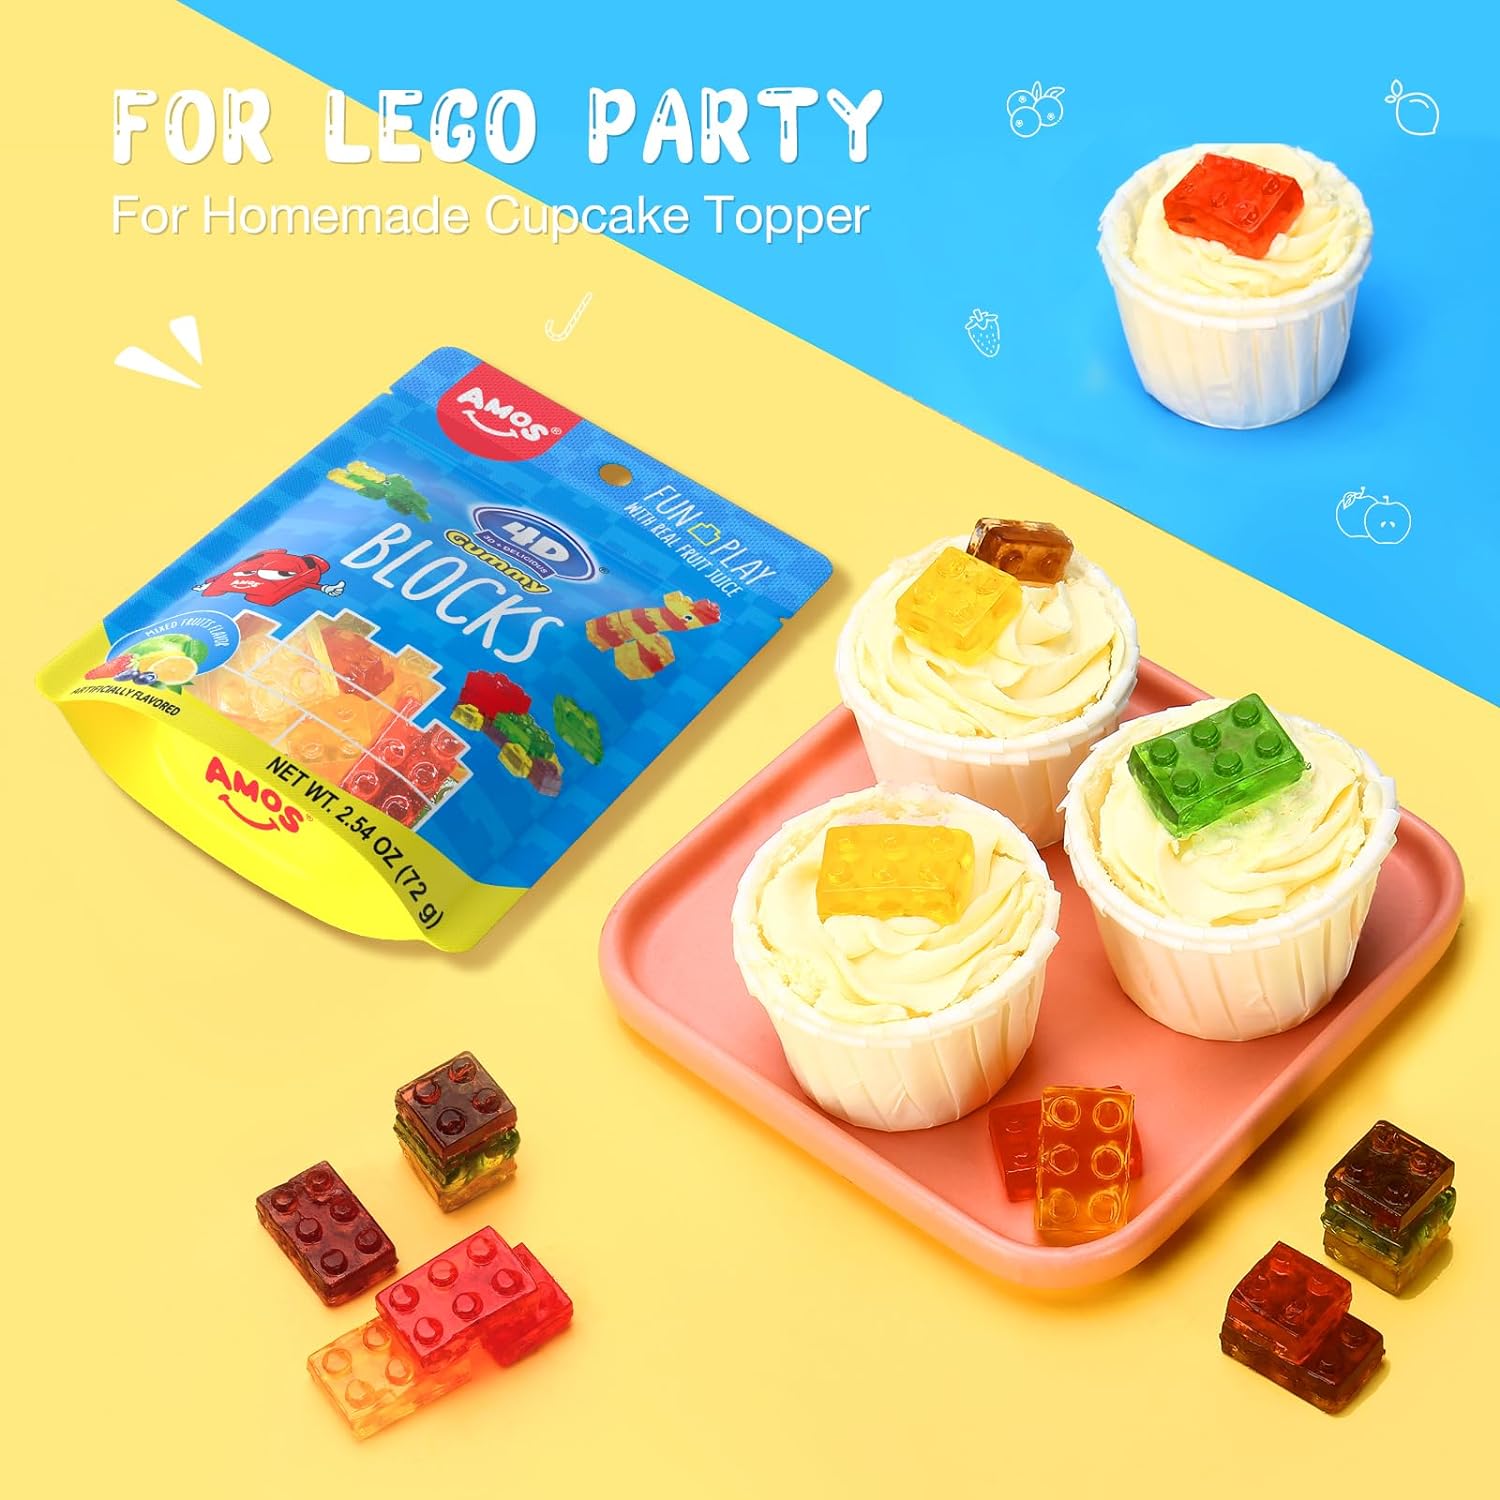 4D Block Gummy - Creative Edible Blocks for Kids 72g